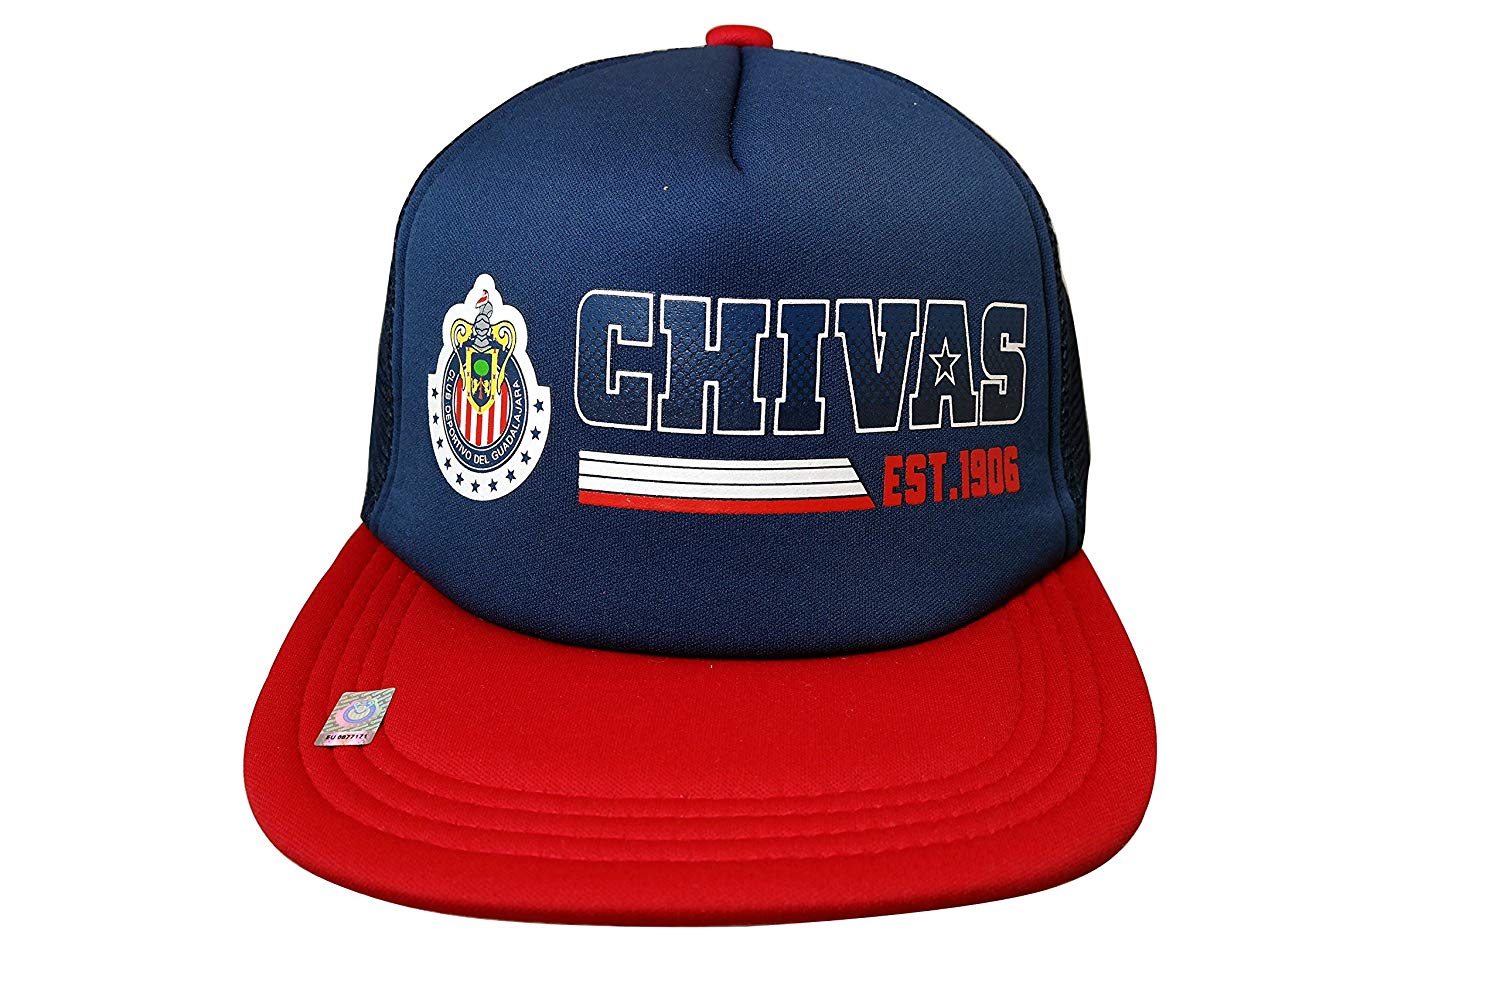 L Team Logo - Amazon.com : CHIVAS de GUADALAJARA OFFICIAL TEAM LOGO CAP / HAT